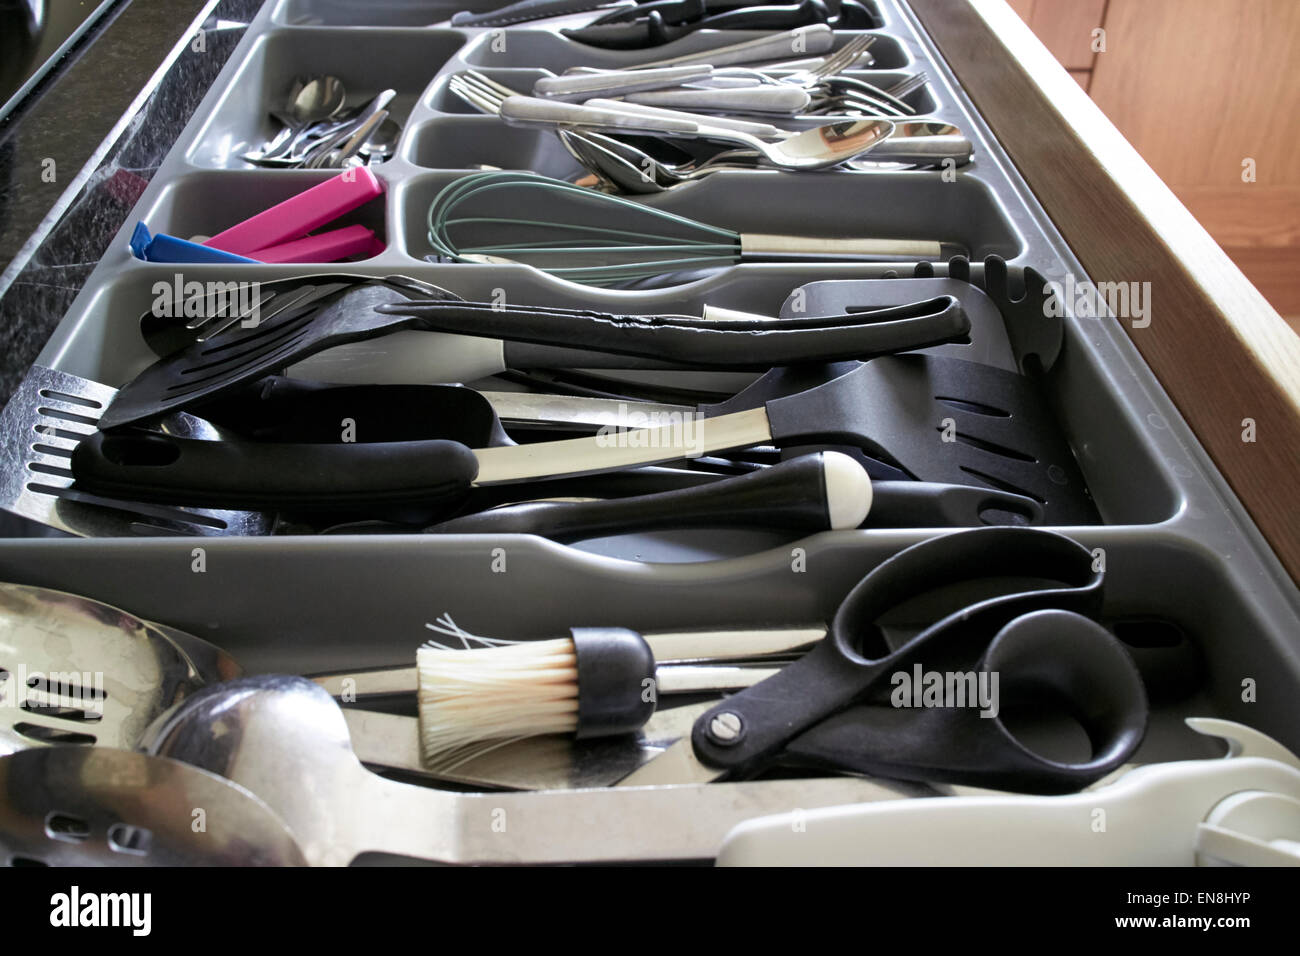 cutlery drawer full of utensils Stock Photo